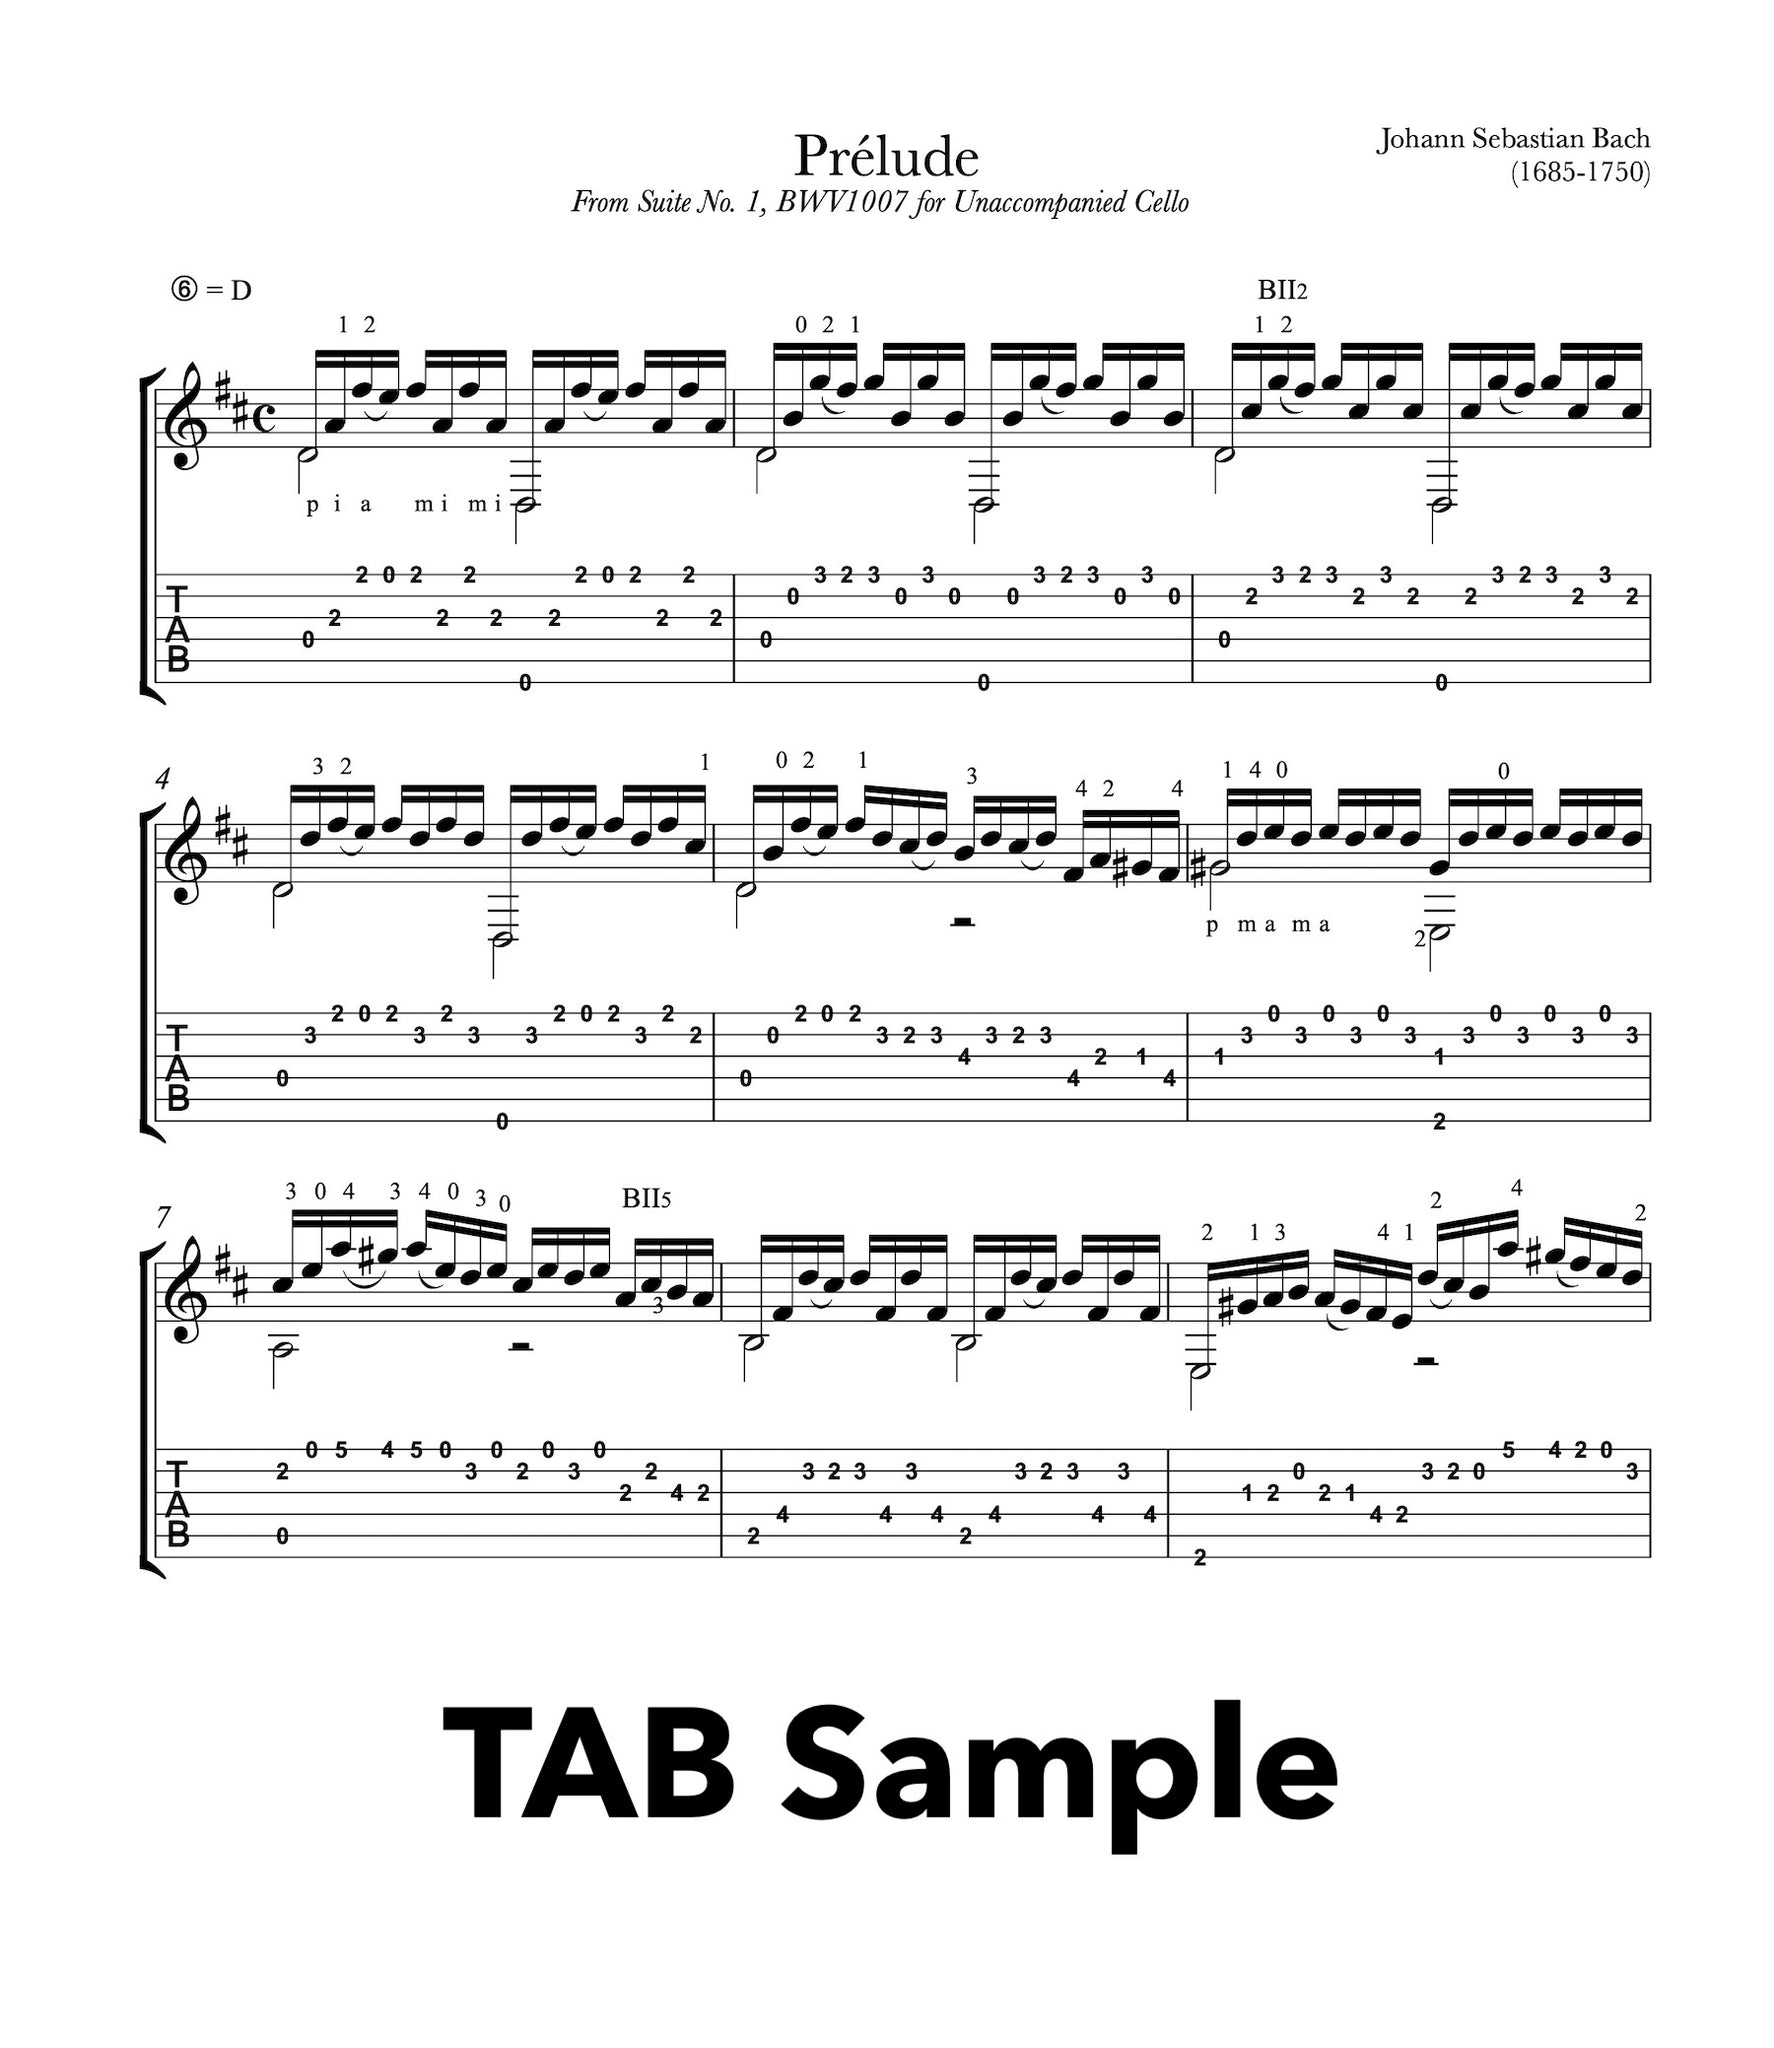 easy bach pieces for guitar pdf